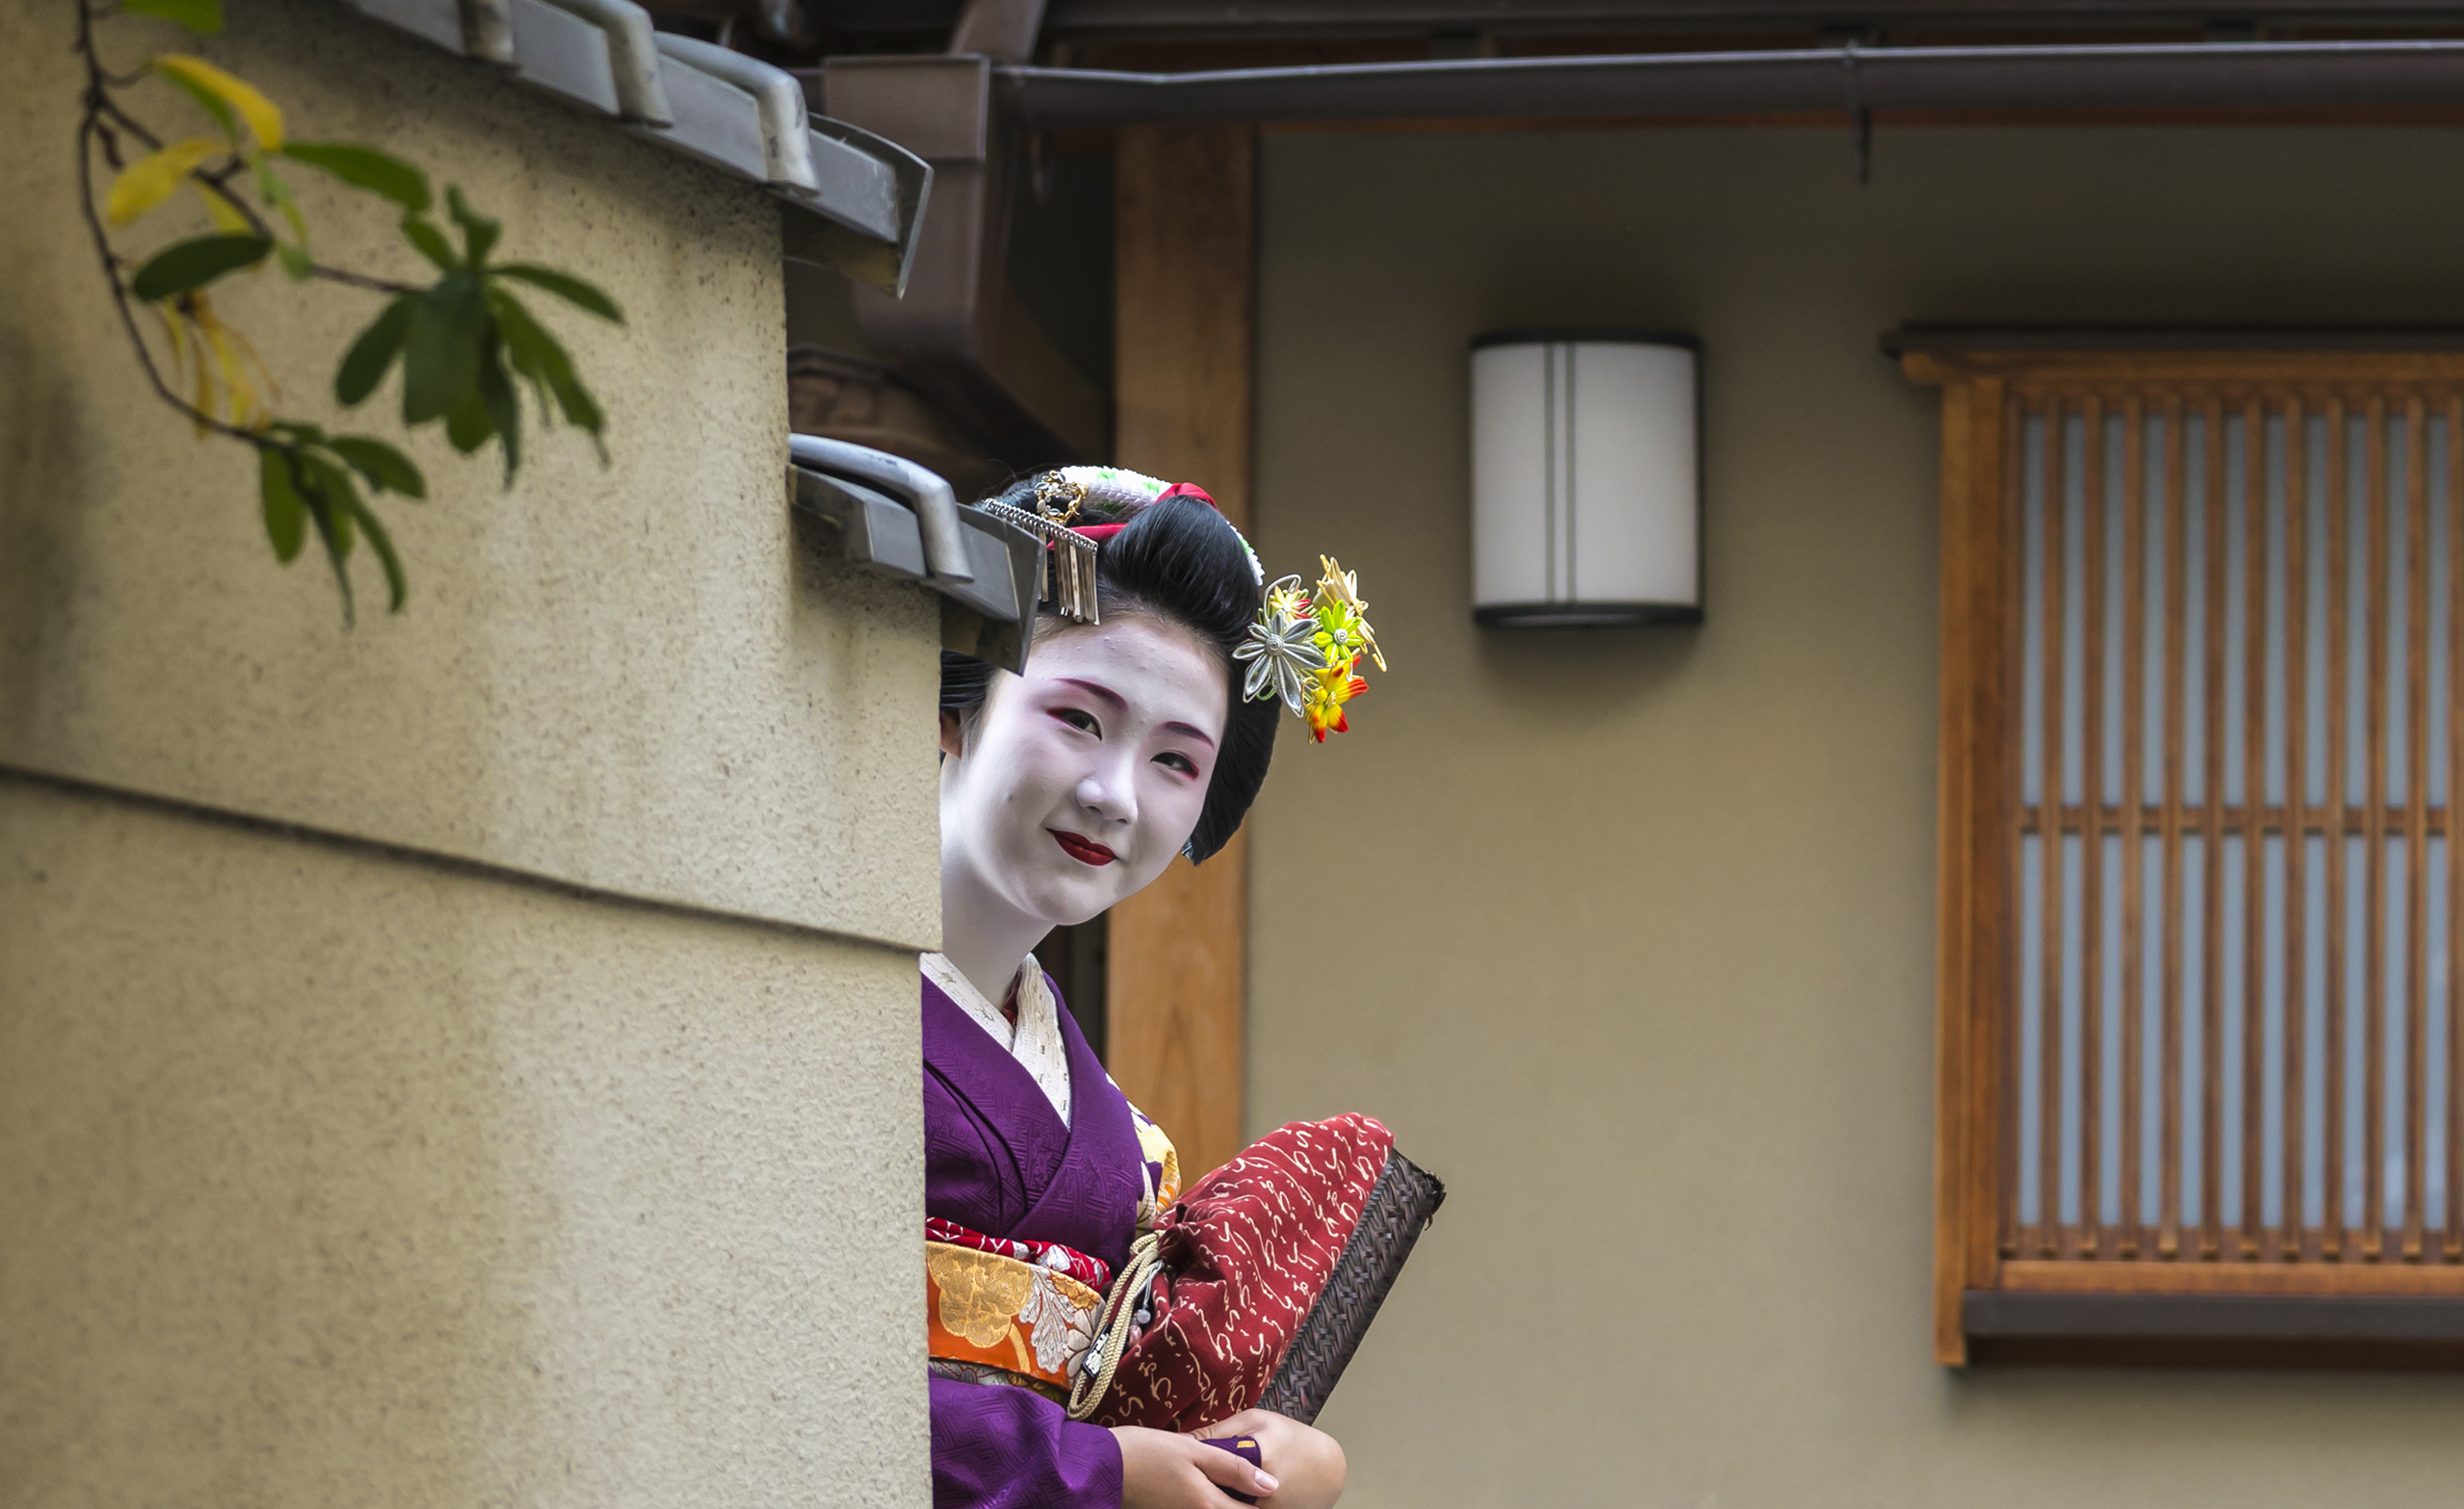 Geisha looking around corner and smiling at the camera